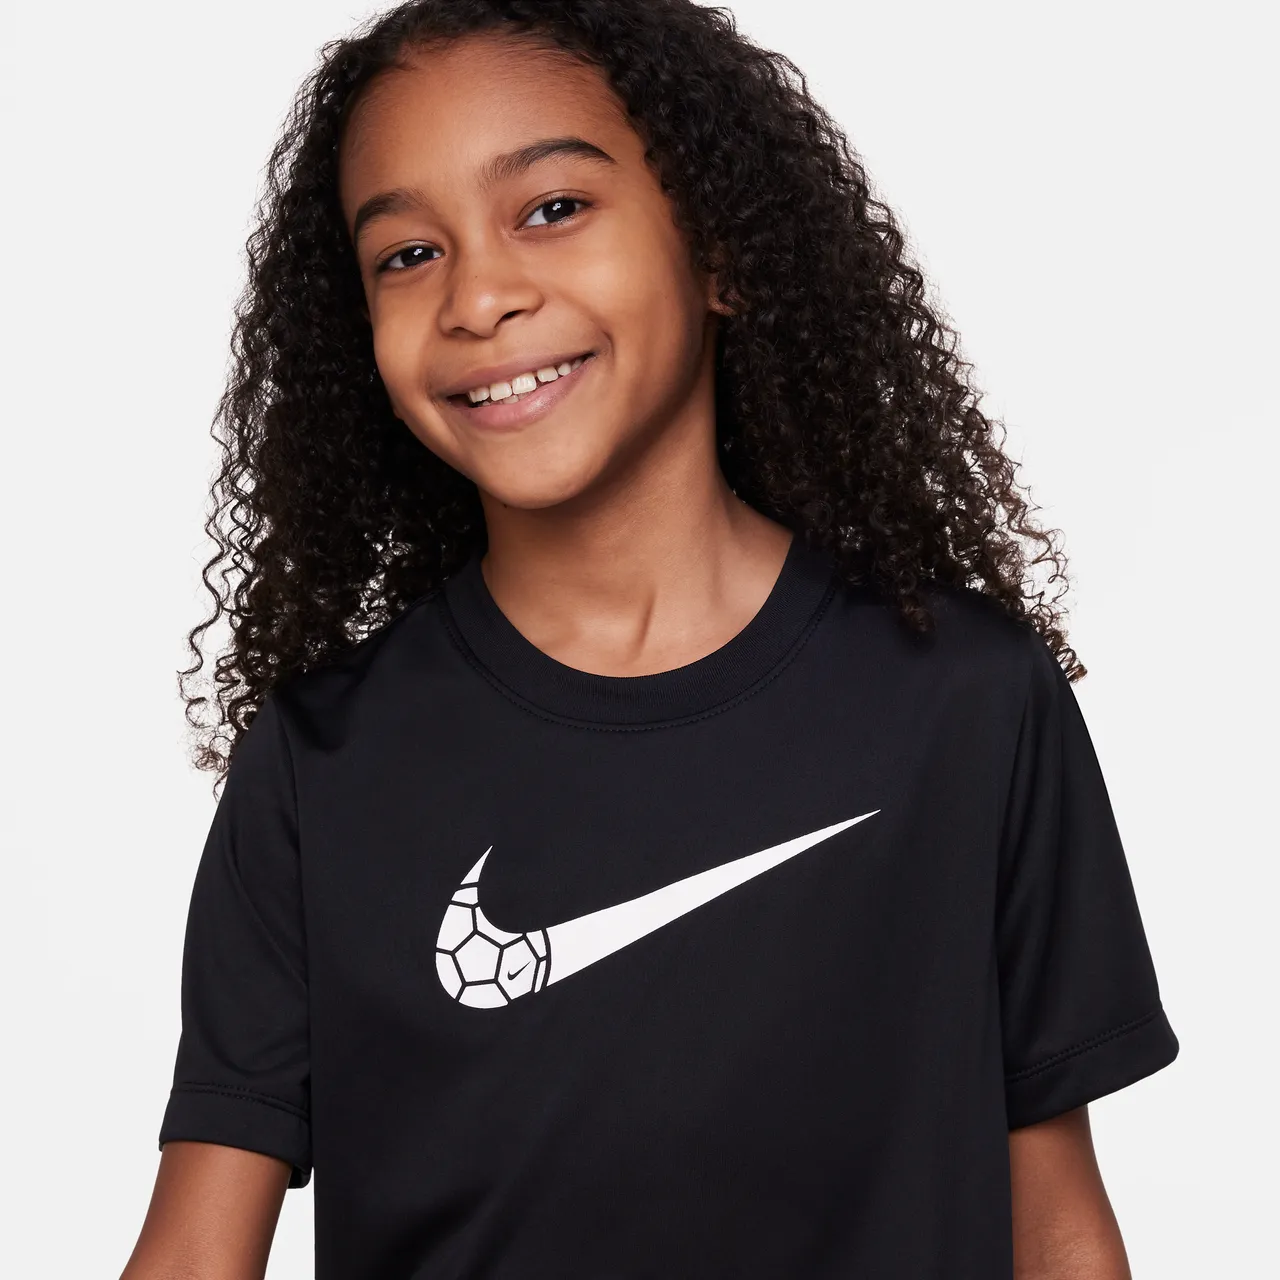 Nike Dri-FIT T-shirt voor kids - Zwart